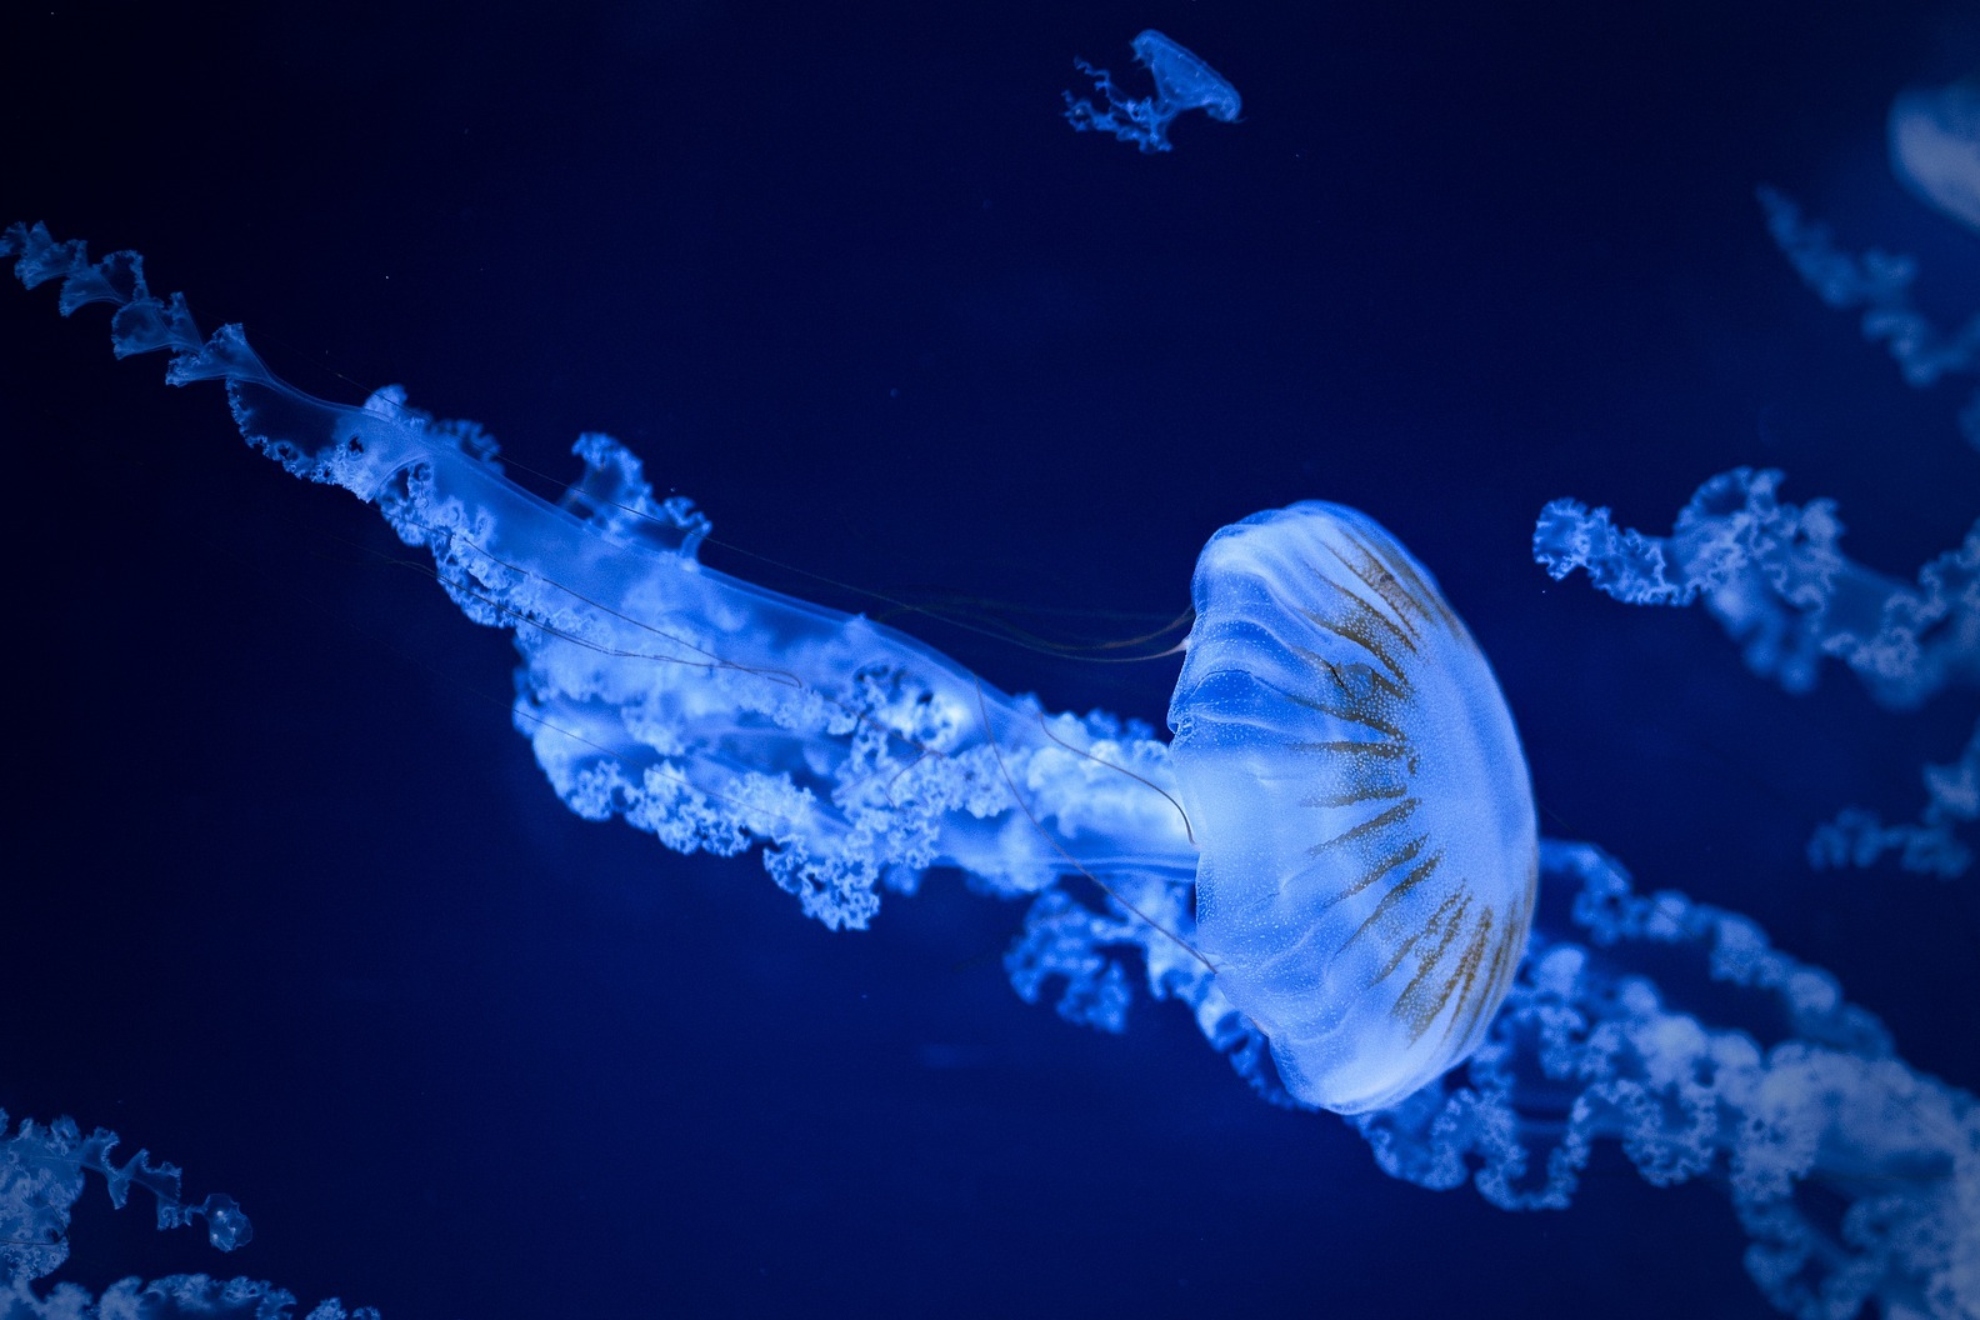 Invasin de medusas en el Mediterrneo